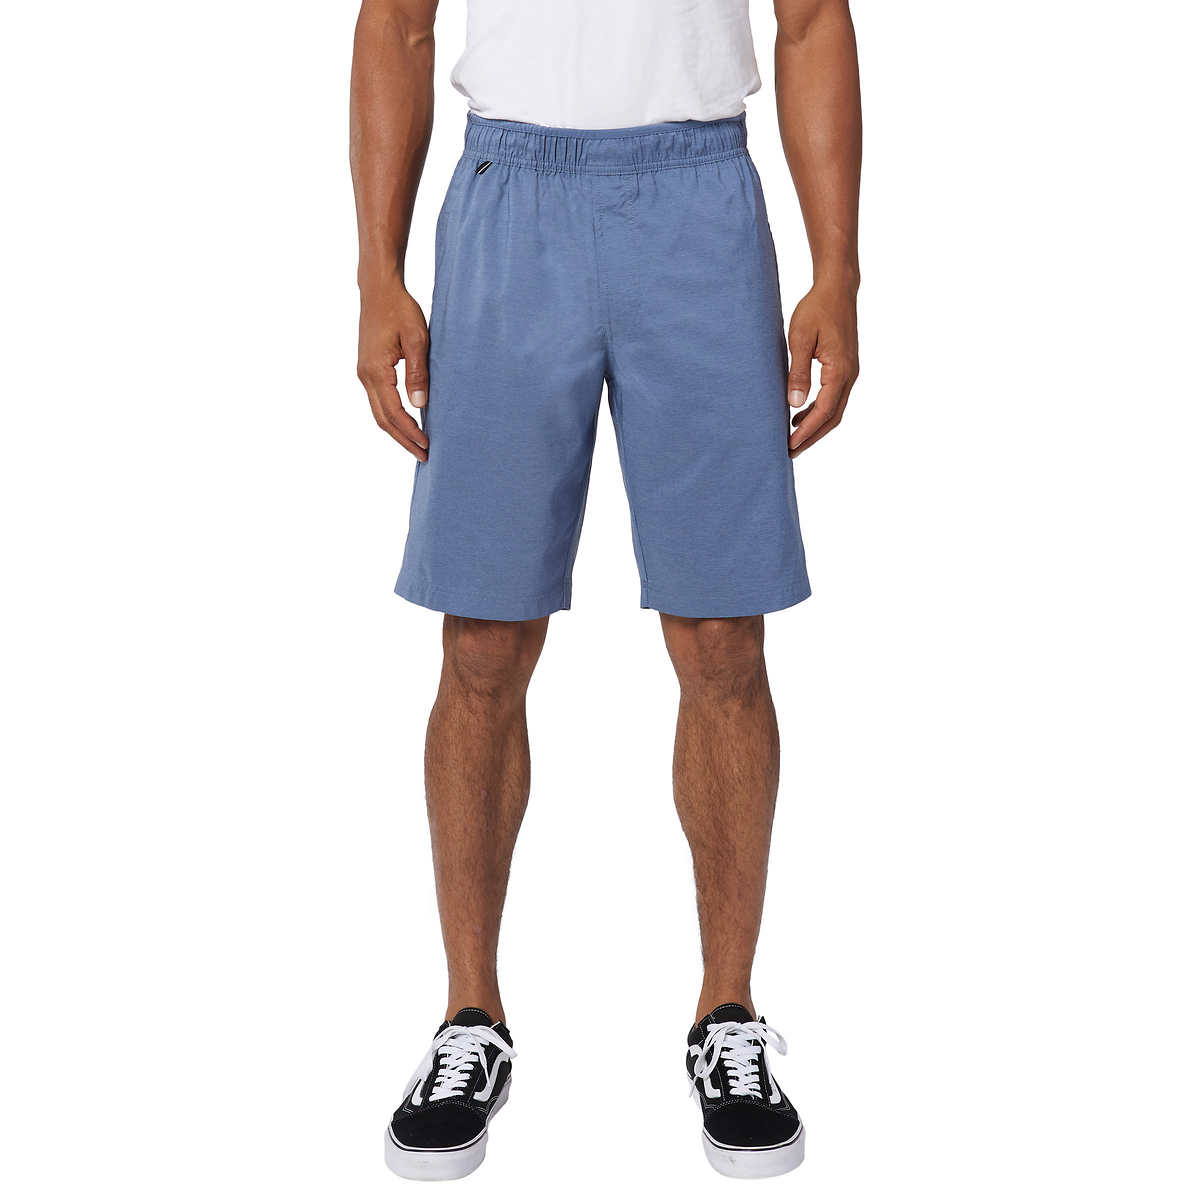 Boy short hot pants stretch casual nylon solid flat front short shorts Black 